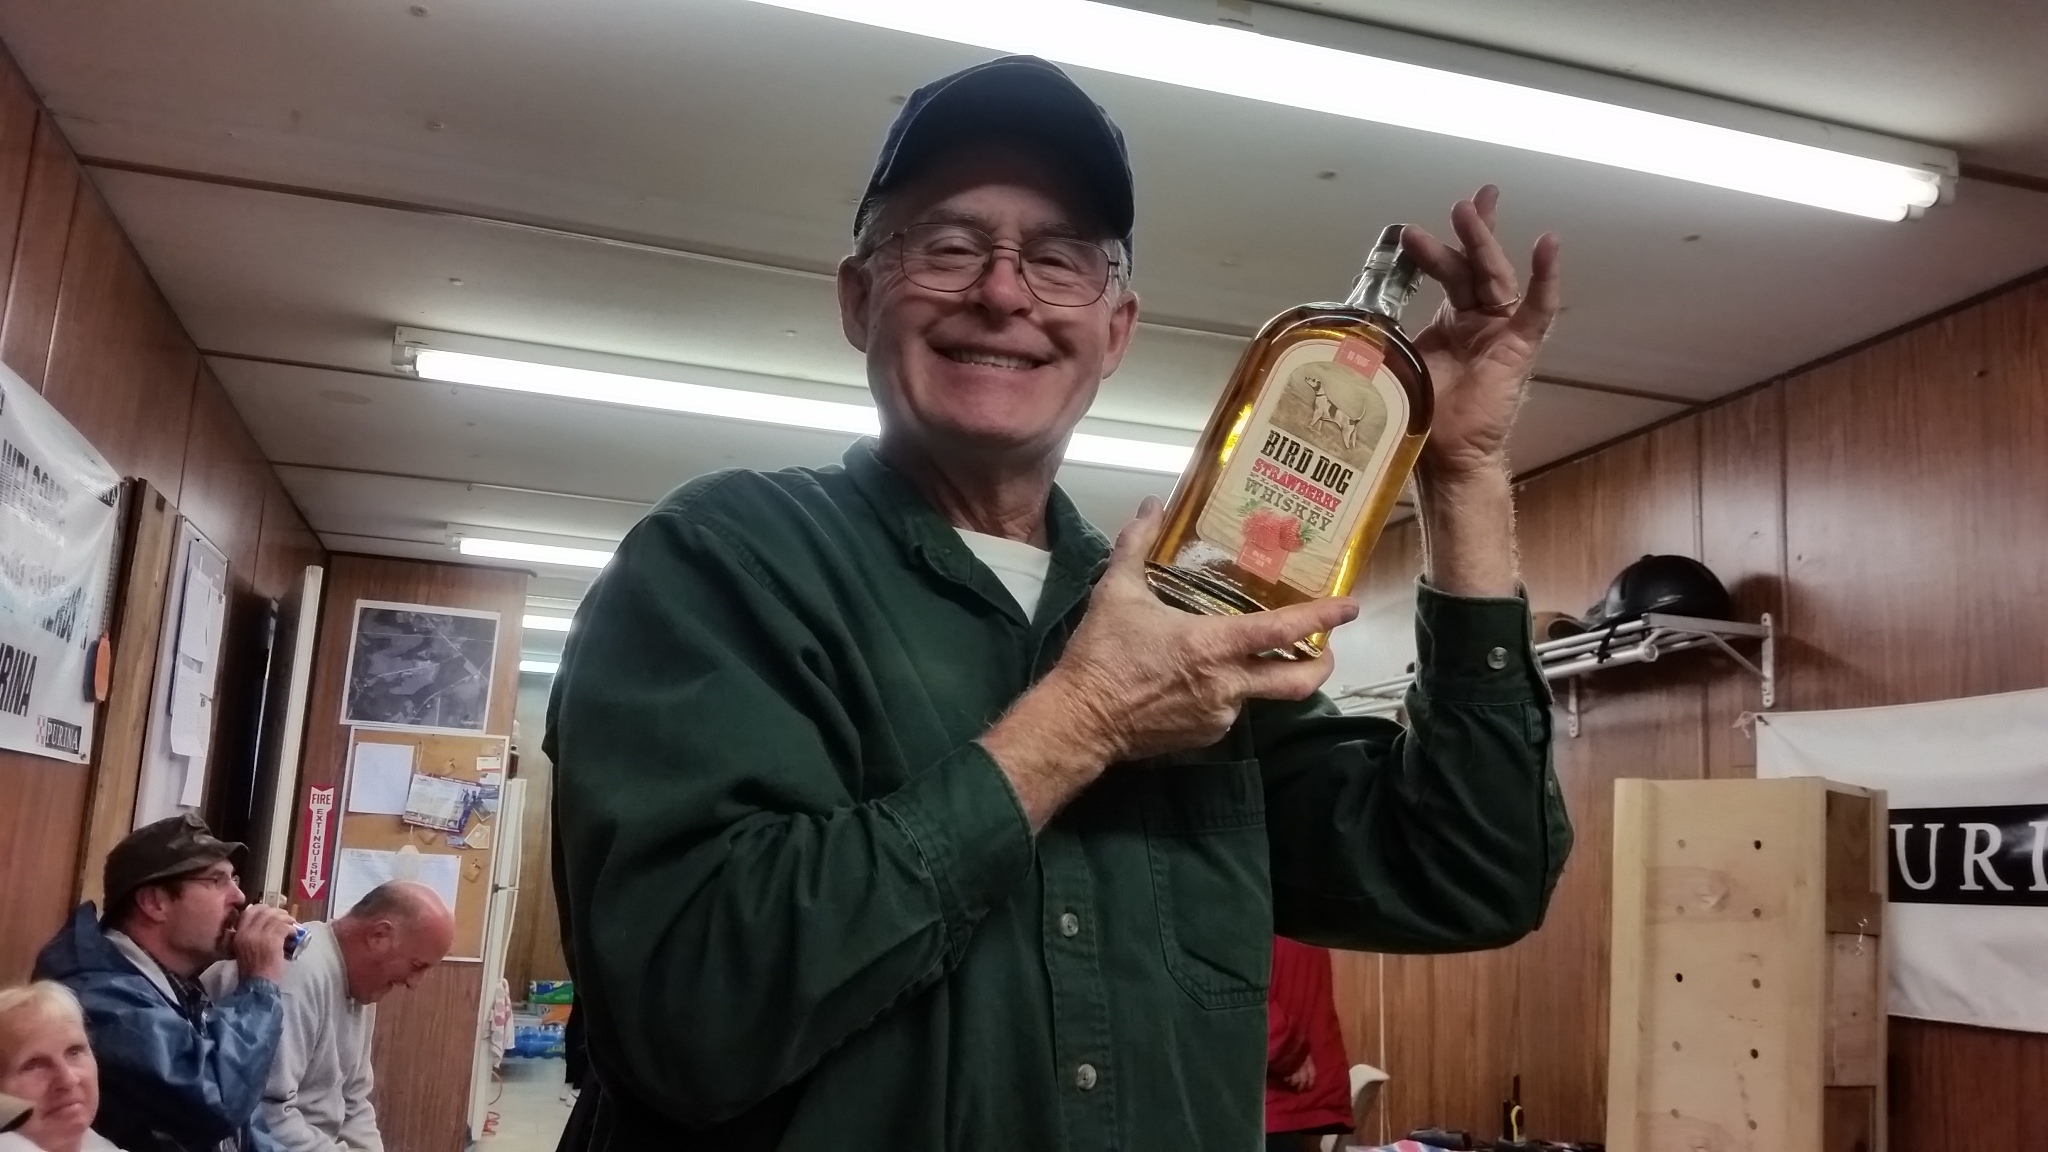 Russ Roth wins some Bird Dog Whiskey